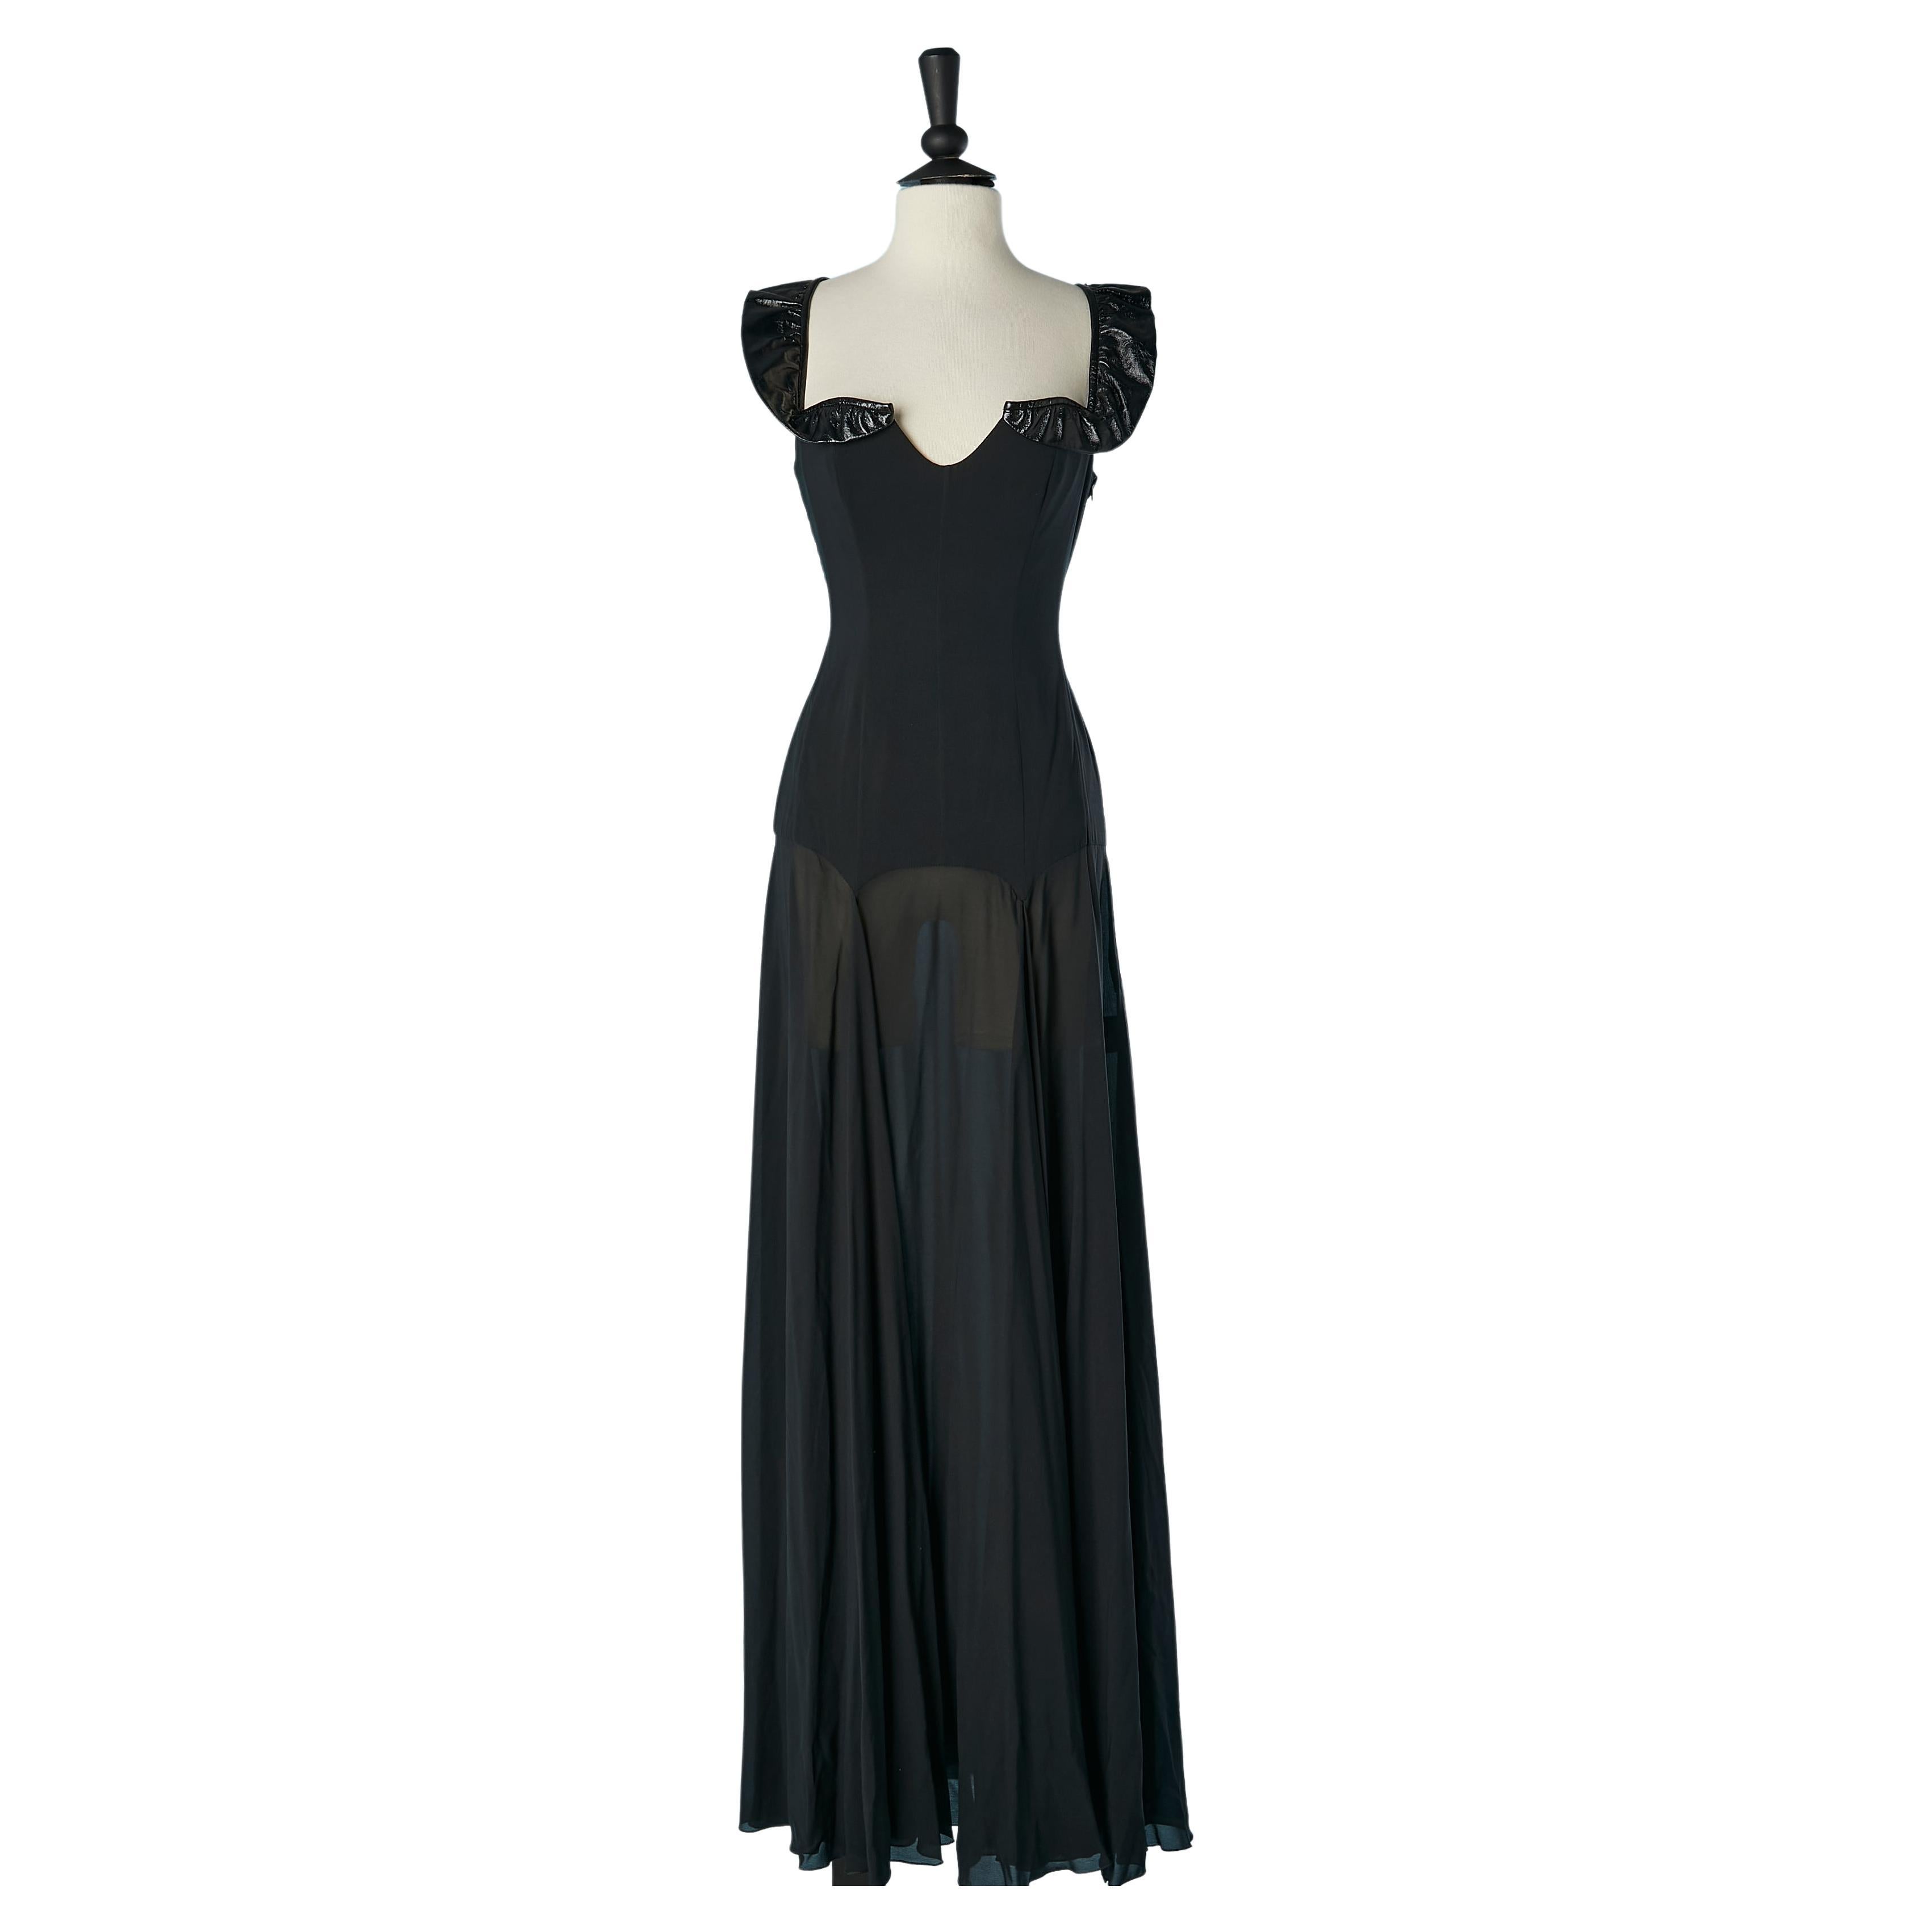 Black backless evening dress with patent leather collar Jasmine Di Milo Universe